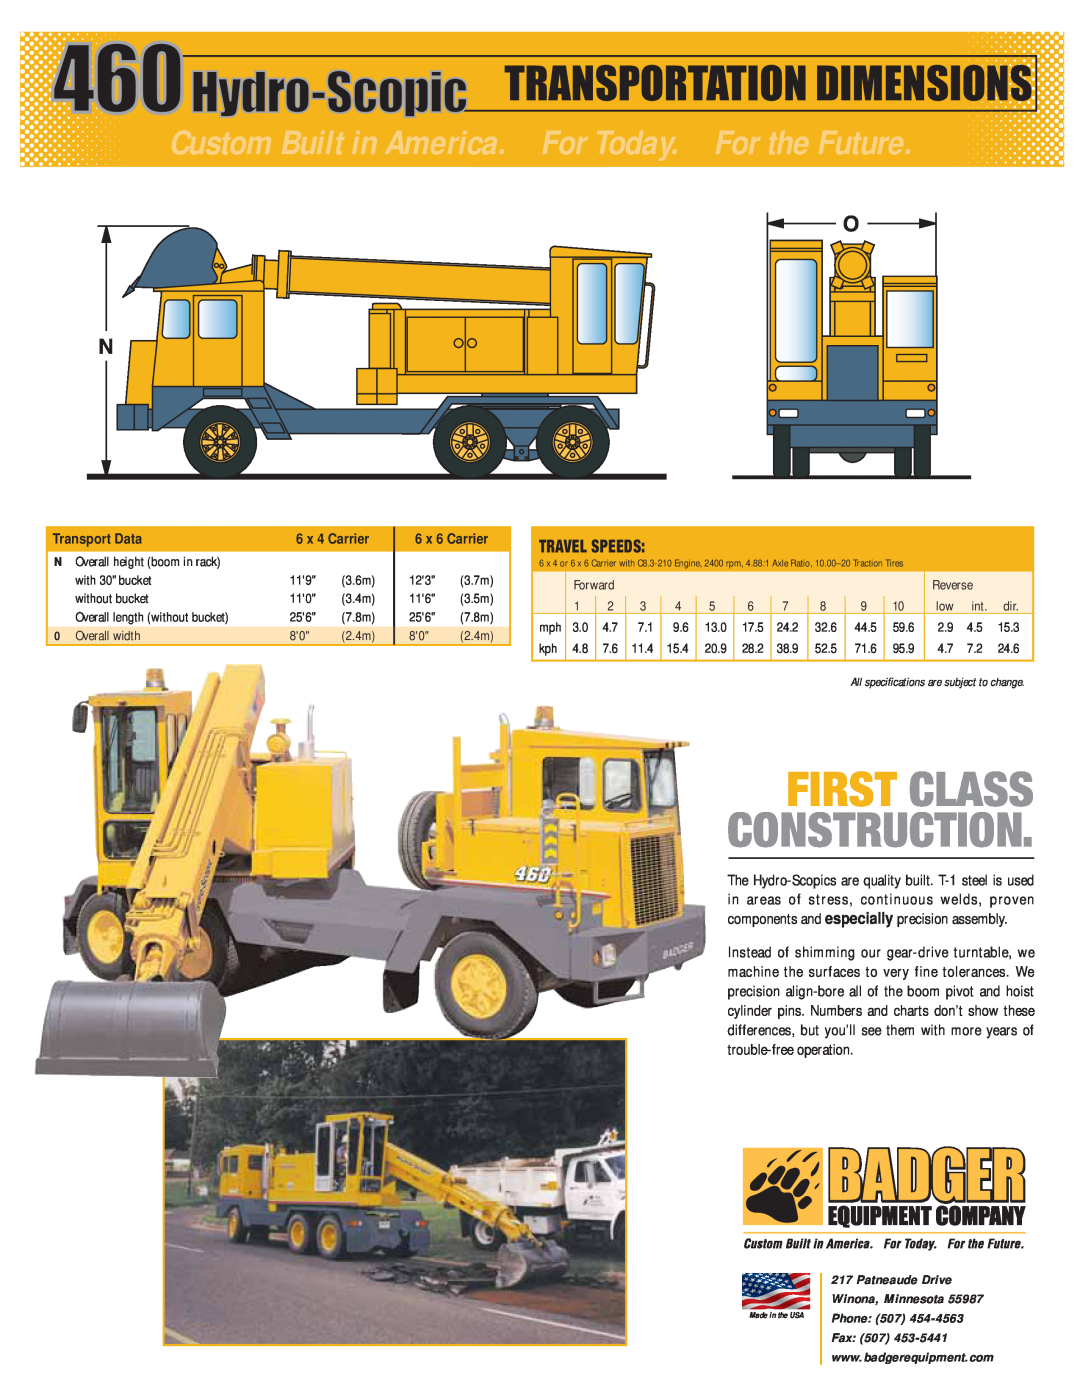 Badger Basket 460 specifications Transportation Dimensions, Construction, First Class, Travel Speeds, Patneaude Drive 